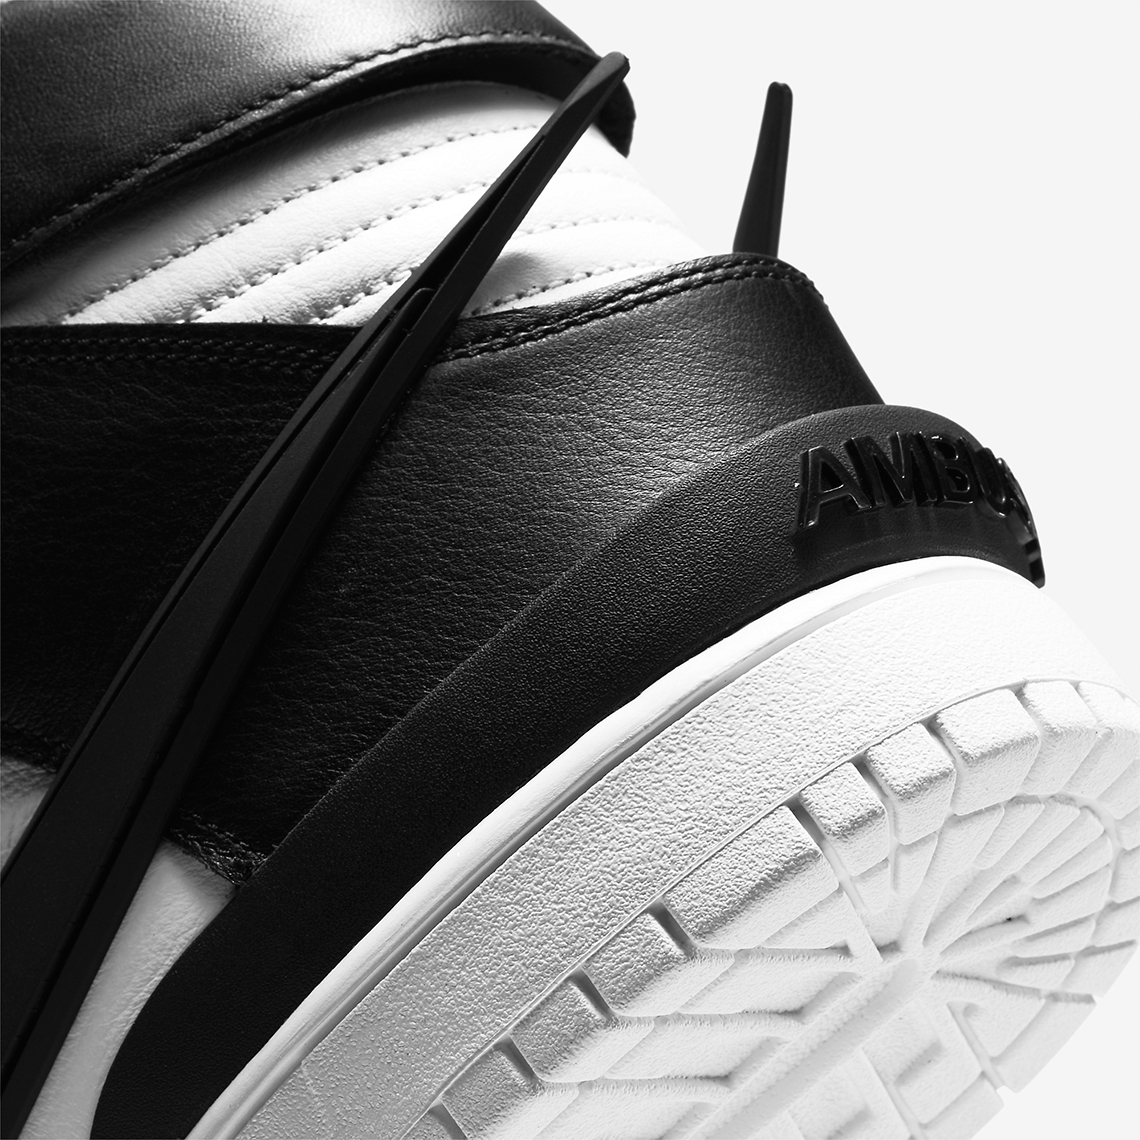 Ambush Nike Dunk High Black White アンブッシュ ナイキ コラボ ダンク ハイ ブラック ホワイト side image CU7544-001